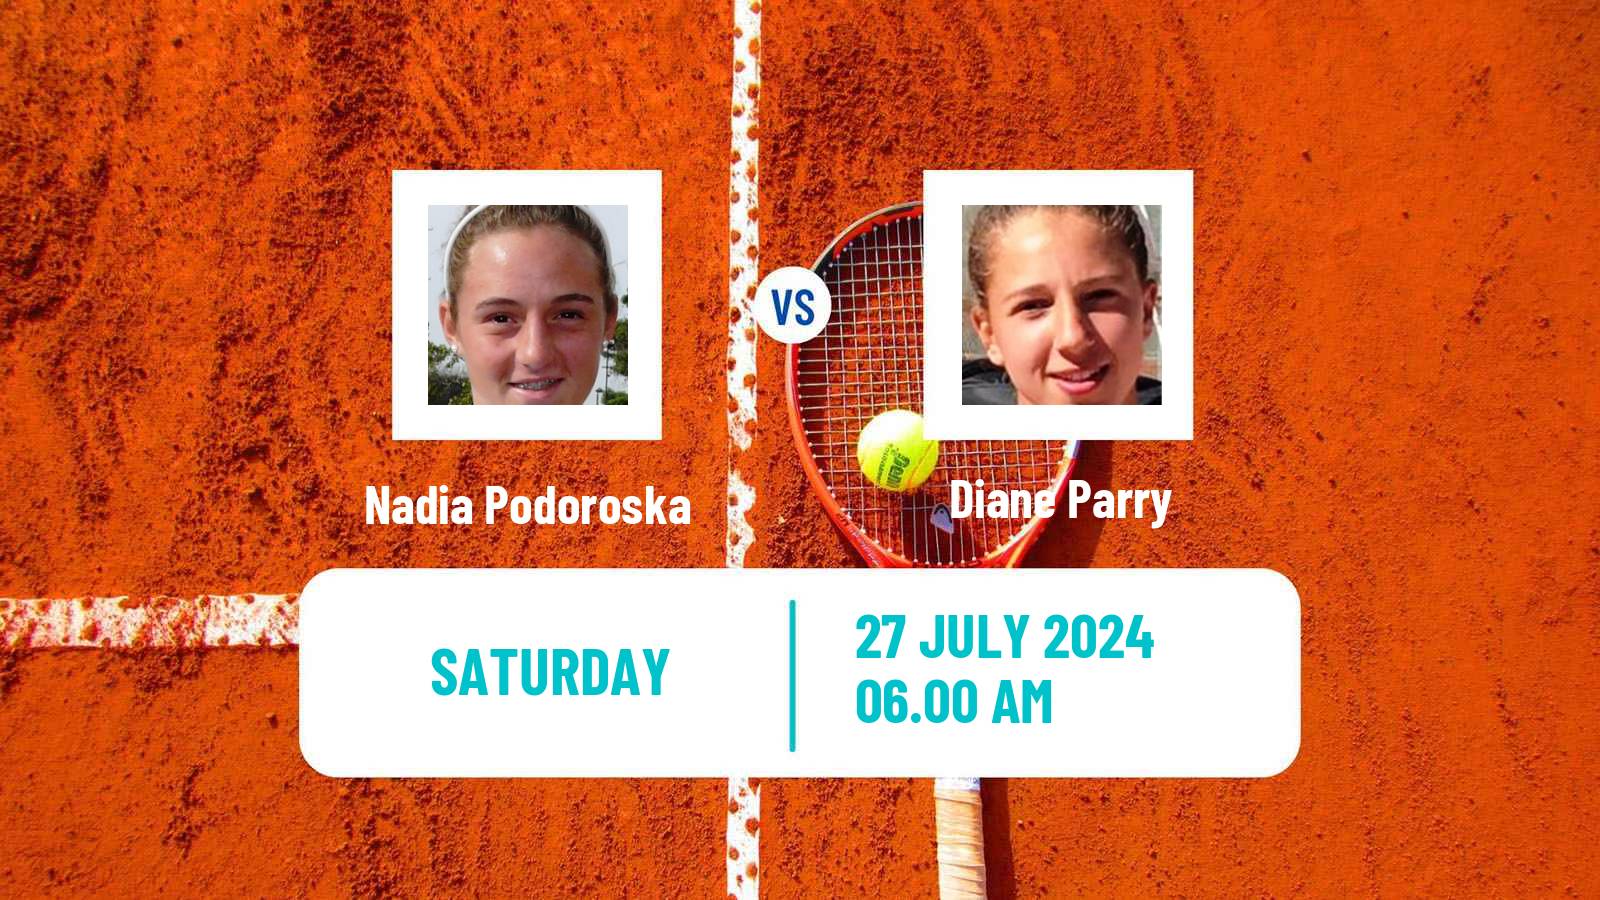 Tennis WTA Olympic Games Nadia Podoroska - Diane Parry